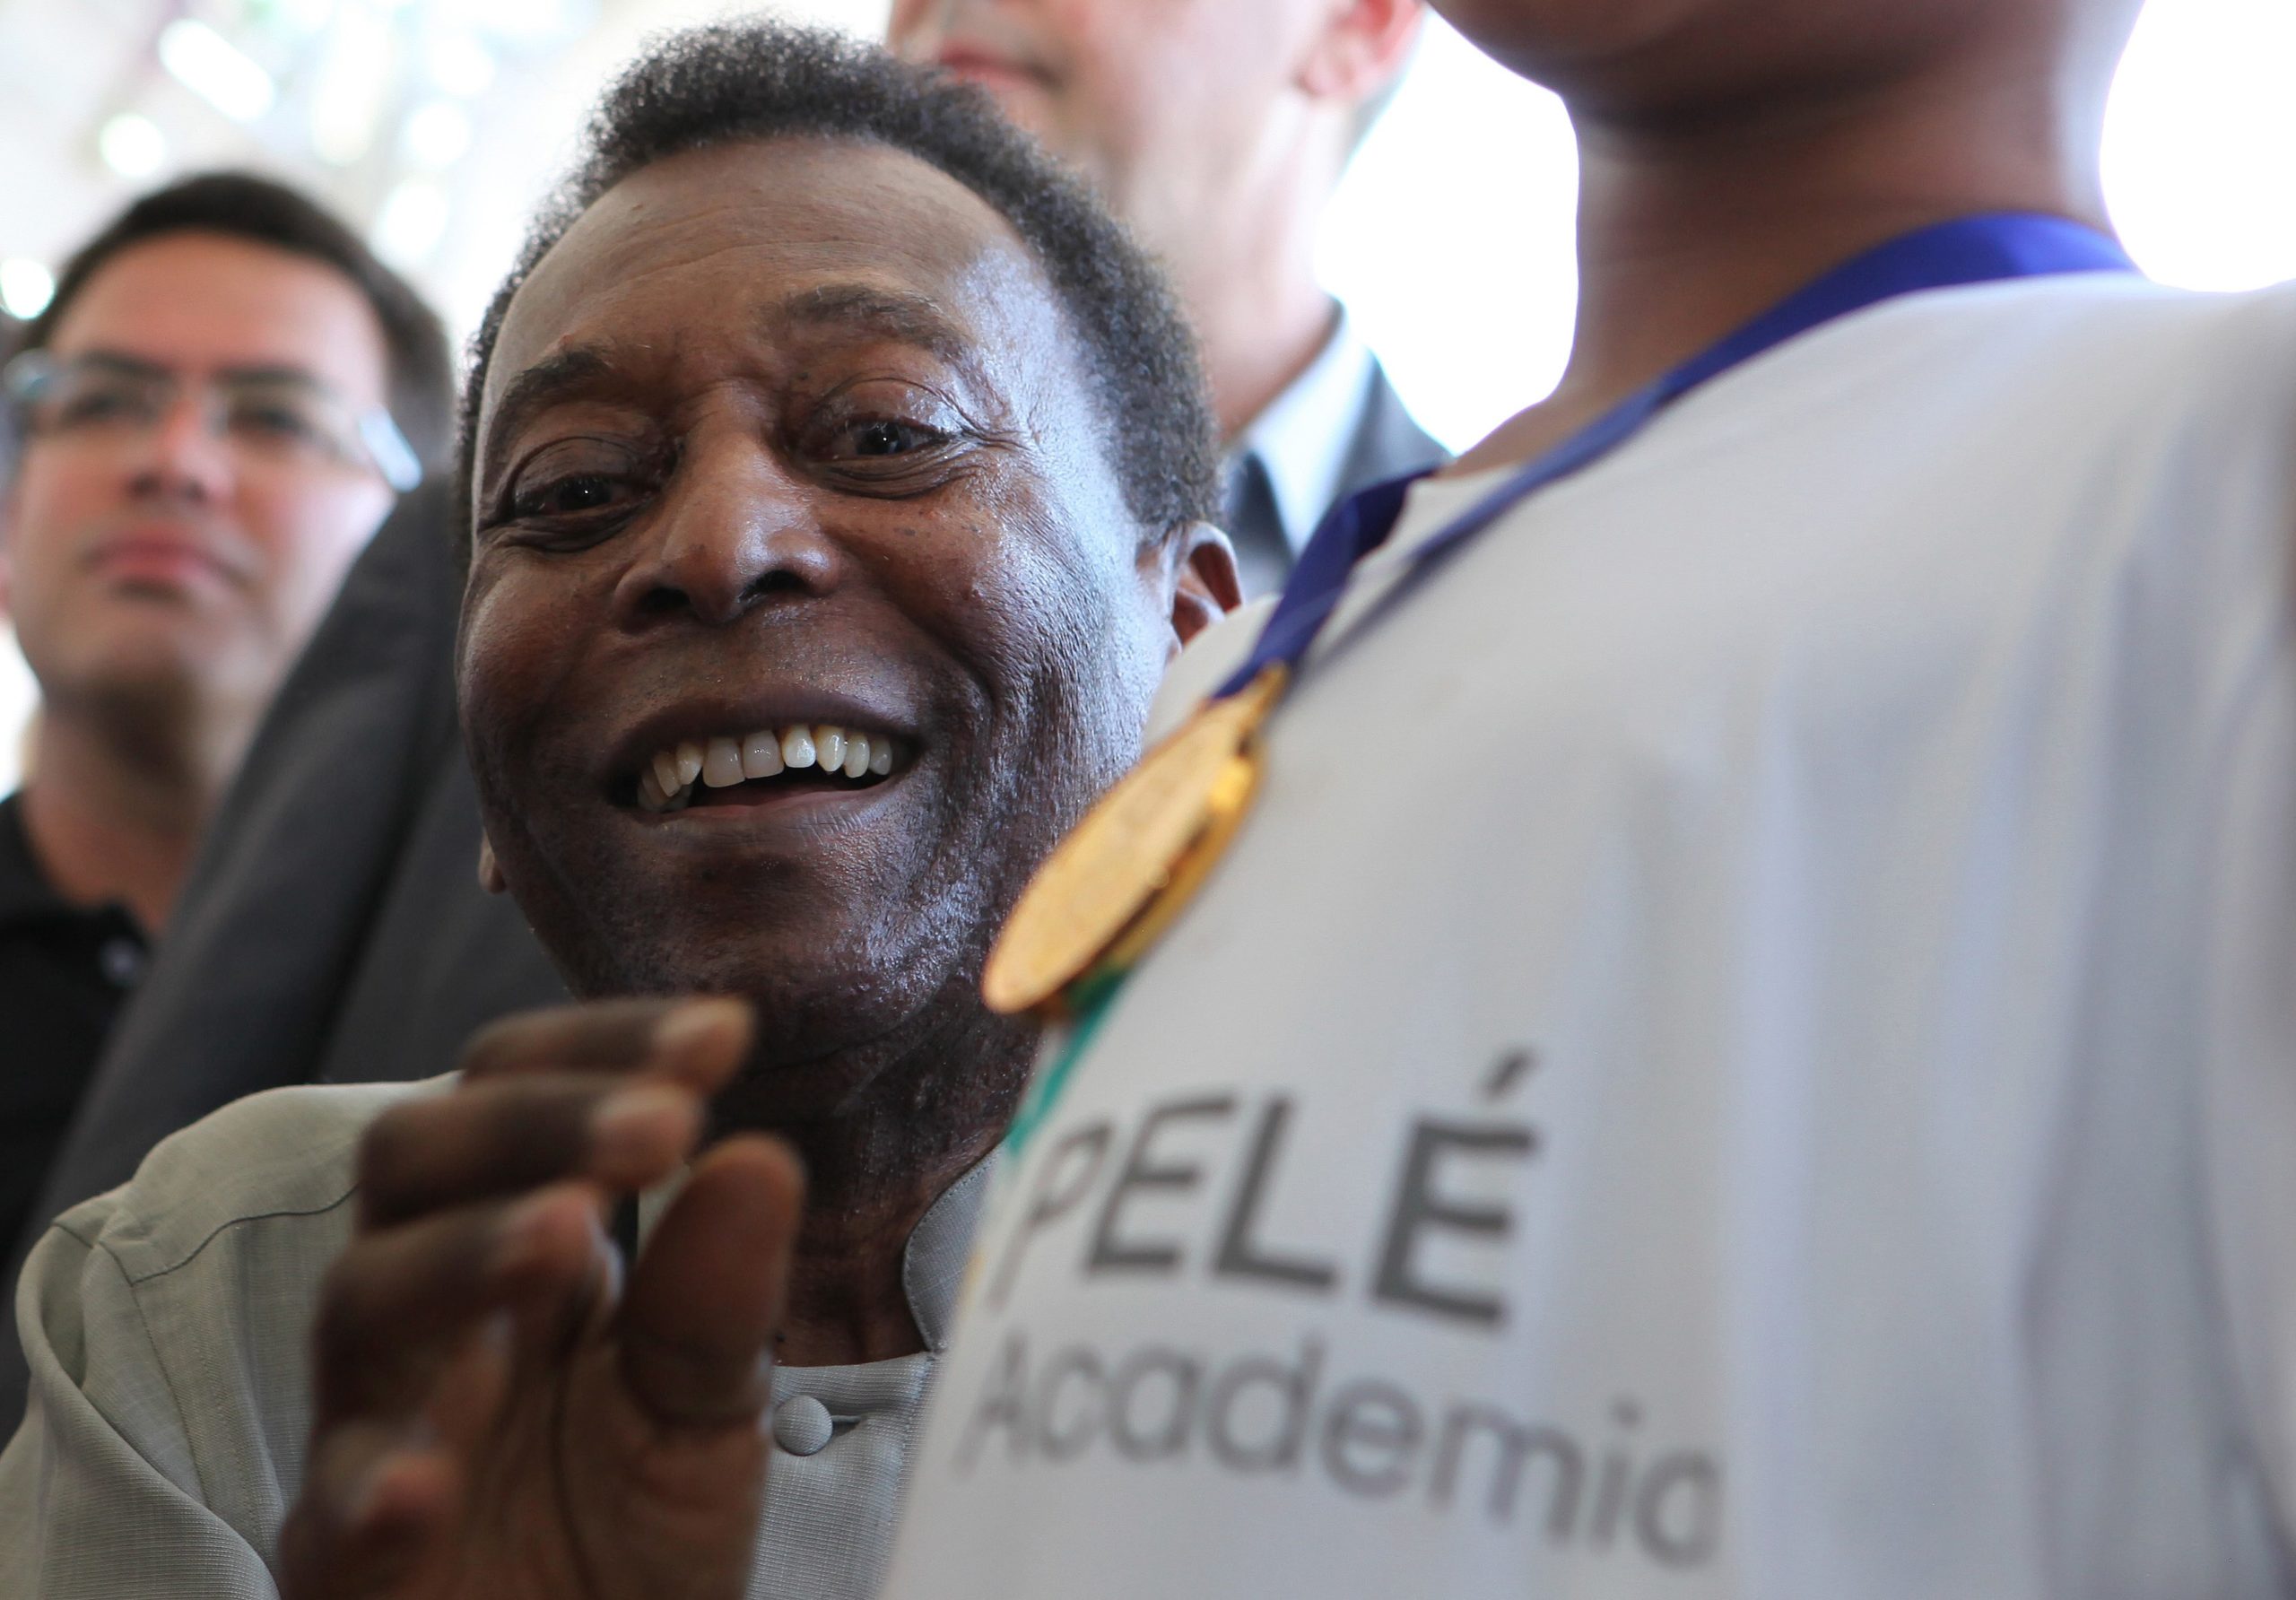 Former Brazilian soccer player 'Pelé' opens a soccer academy in Brazil